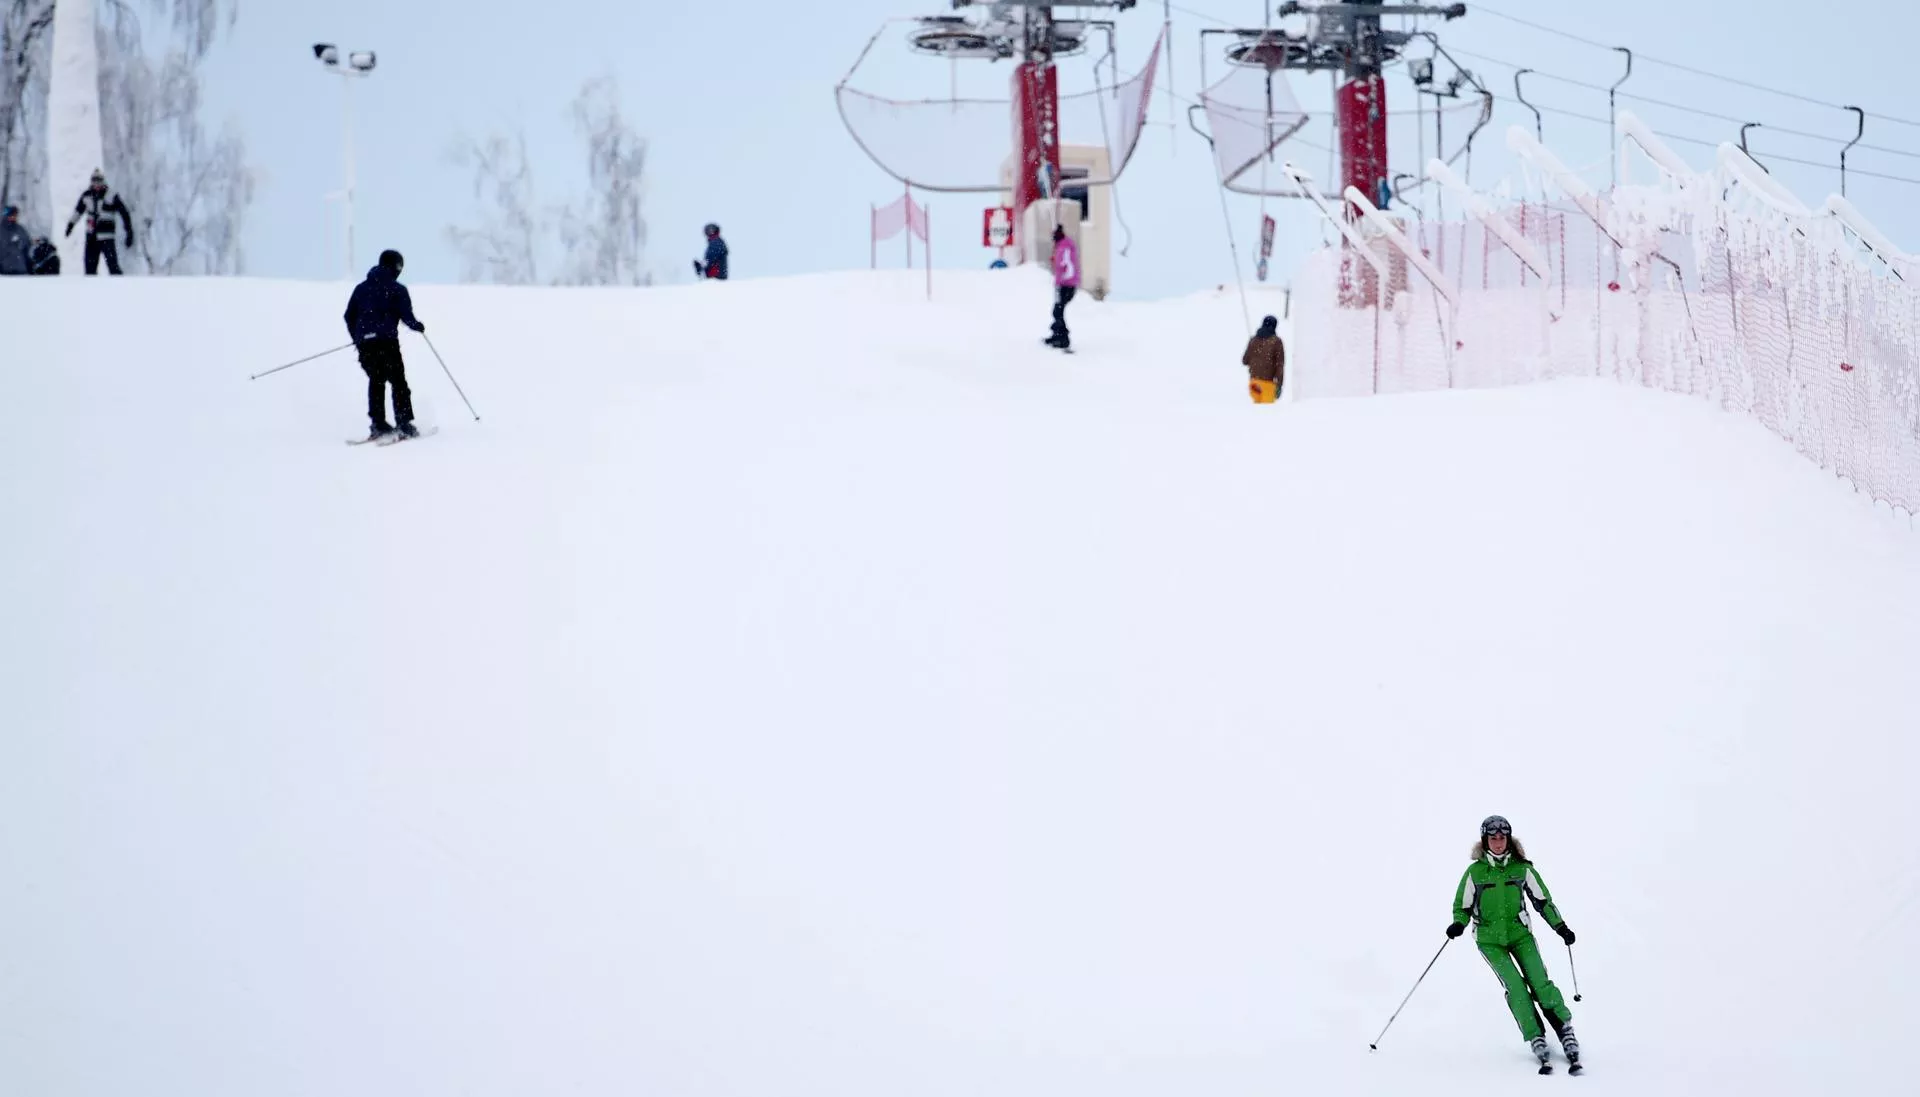 Zagarkalns in Latvia, Europe | Snowboarding,Skiing - Rated 3.9